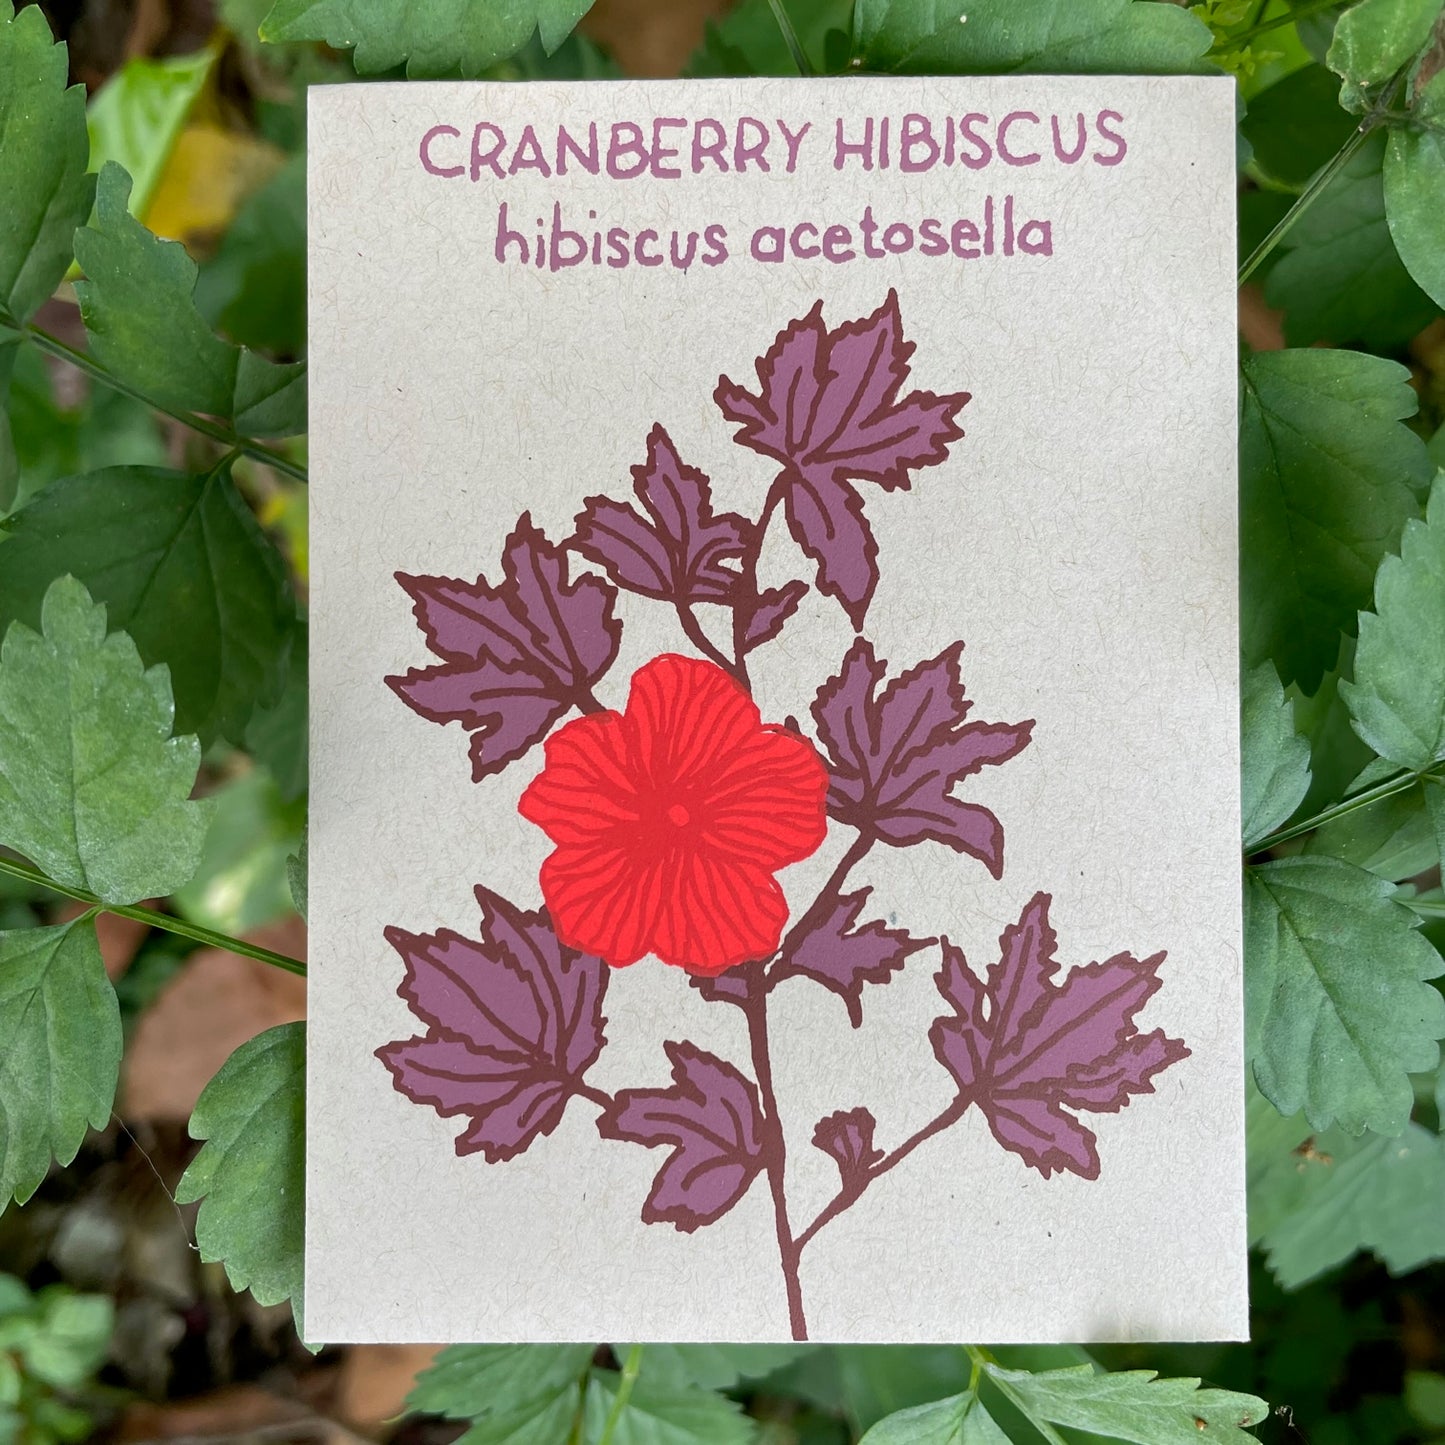 Cranberry Hibiscus (hibiscus acetosella) 10 seeds